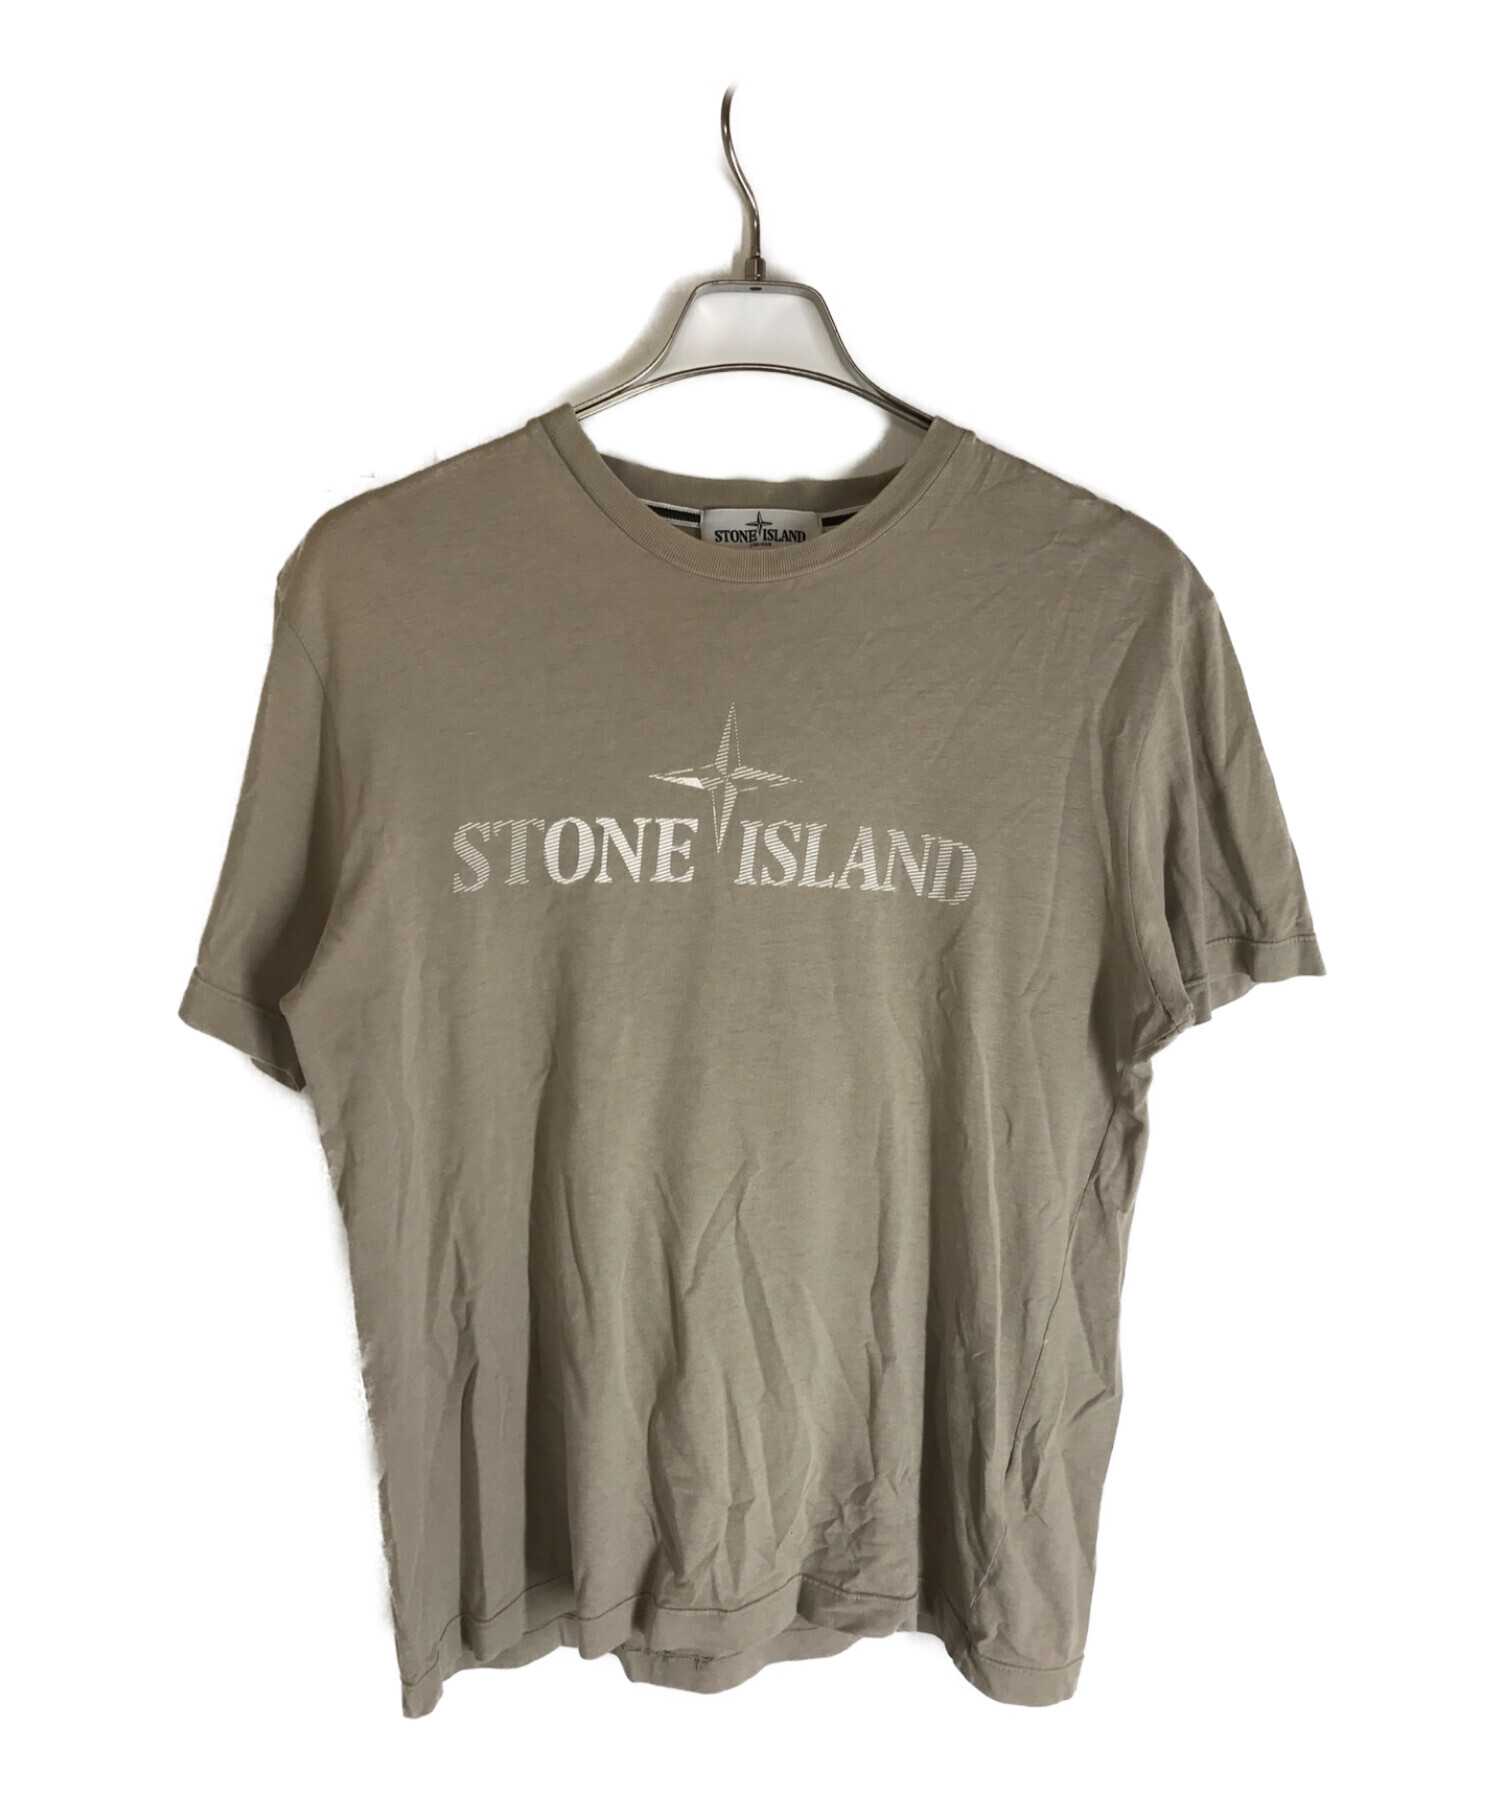 STONE ISLAND ストーンアイランド 半袖Tシャツ